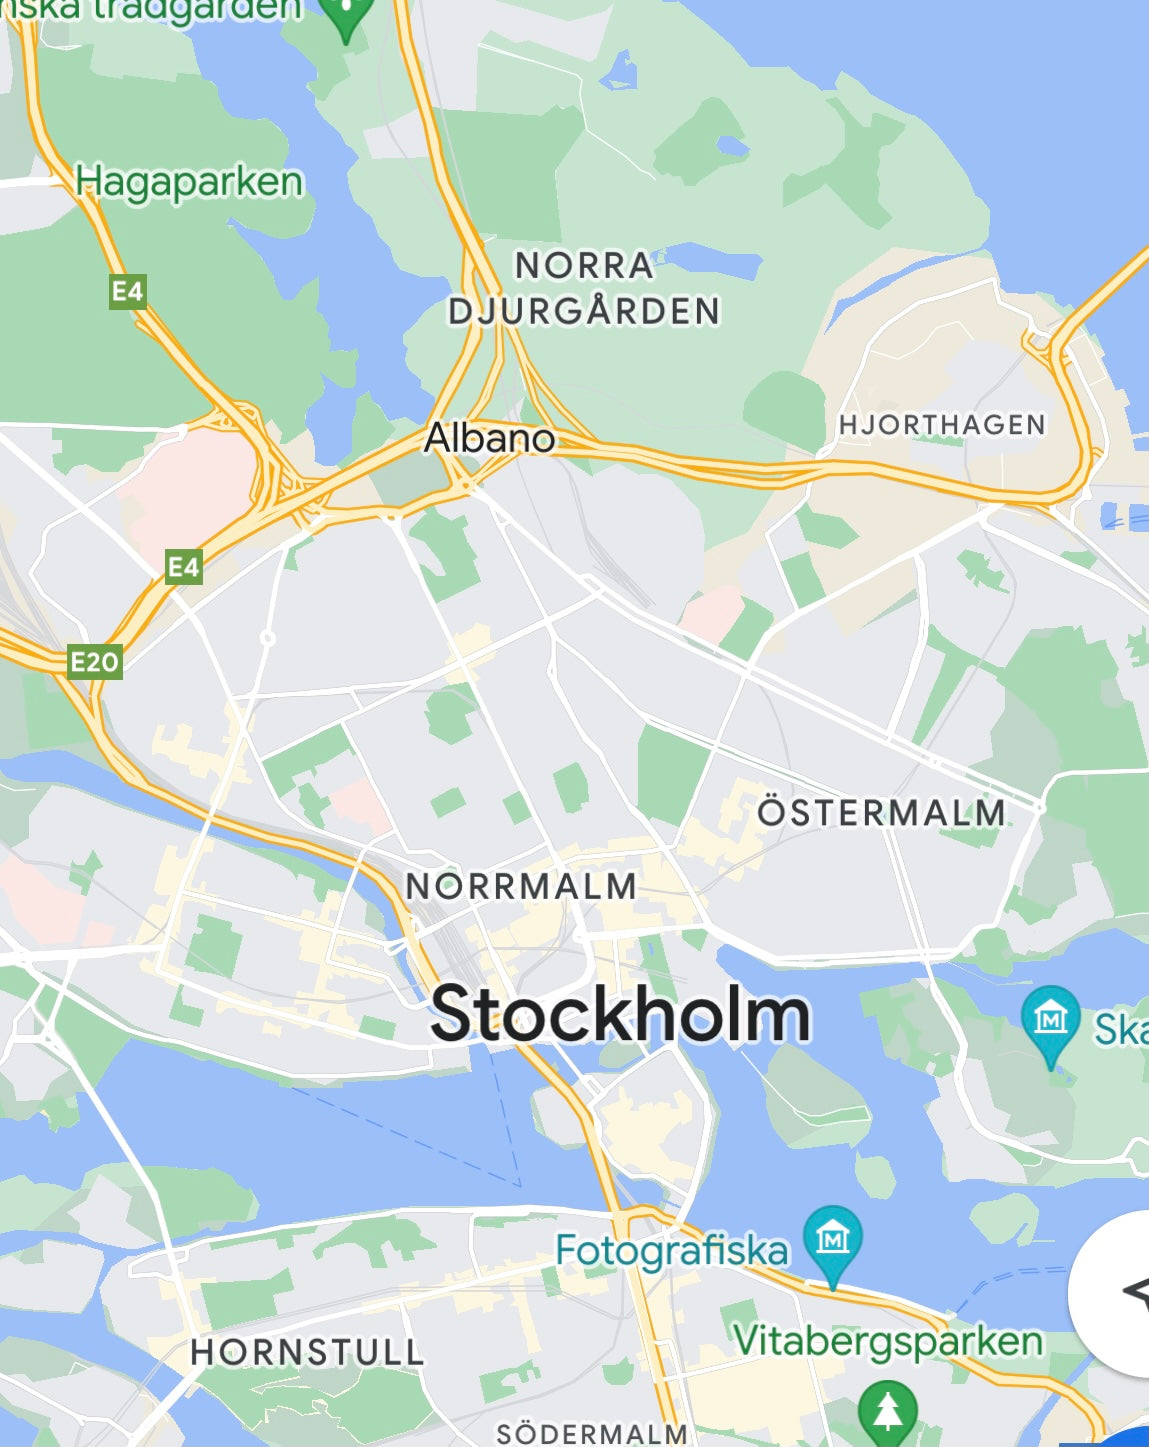 Fågelvy över Stockholm